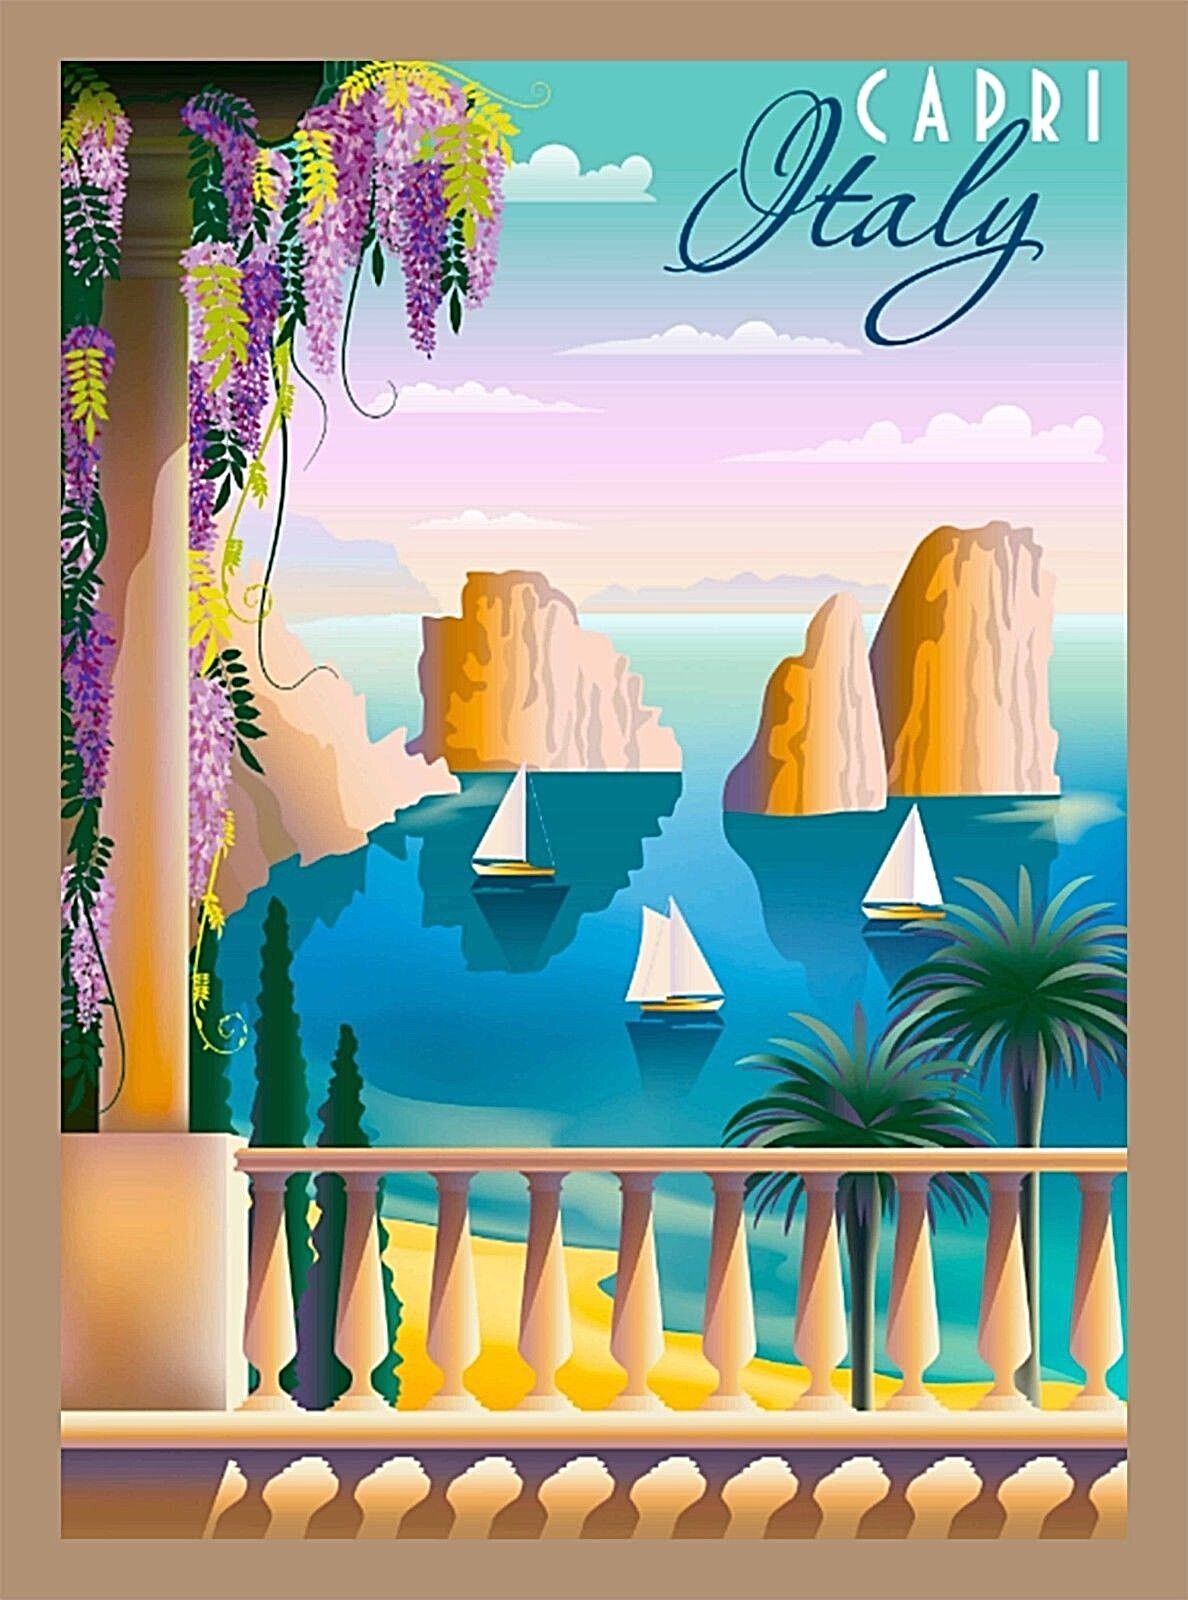 Capri Italy Retro Italian Europe Art Travel Advertisement Poster Picture Print